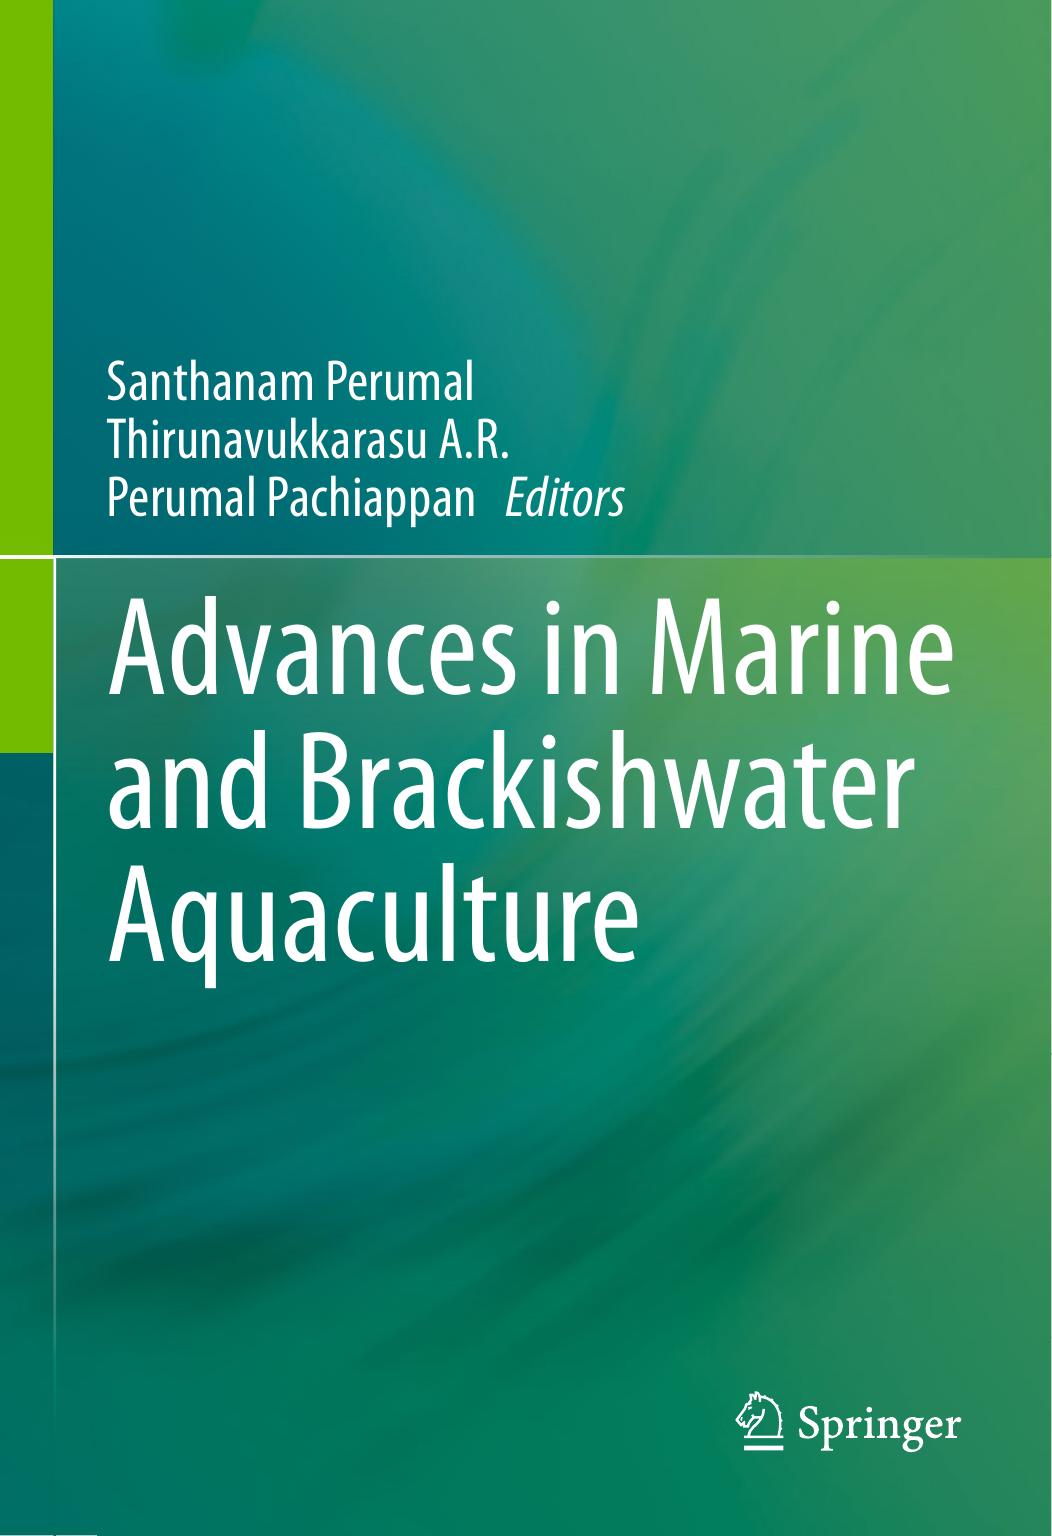 Advances in Marine and Brackishwater Aquaculture 2015